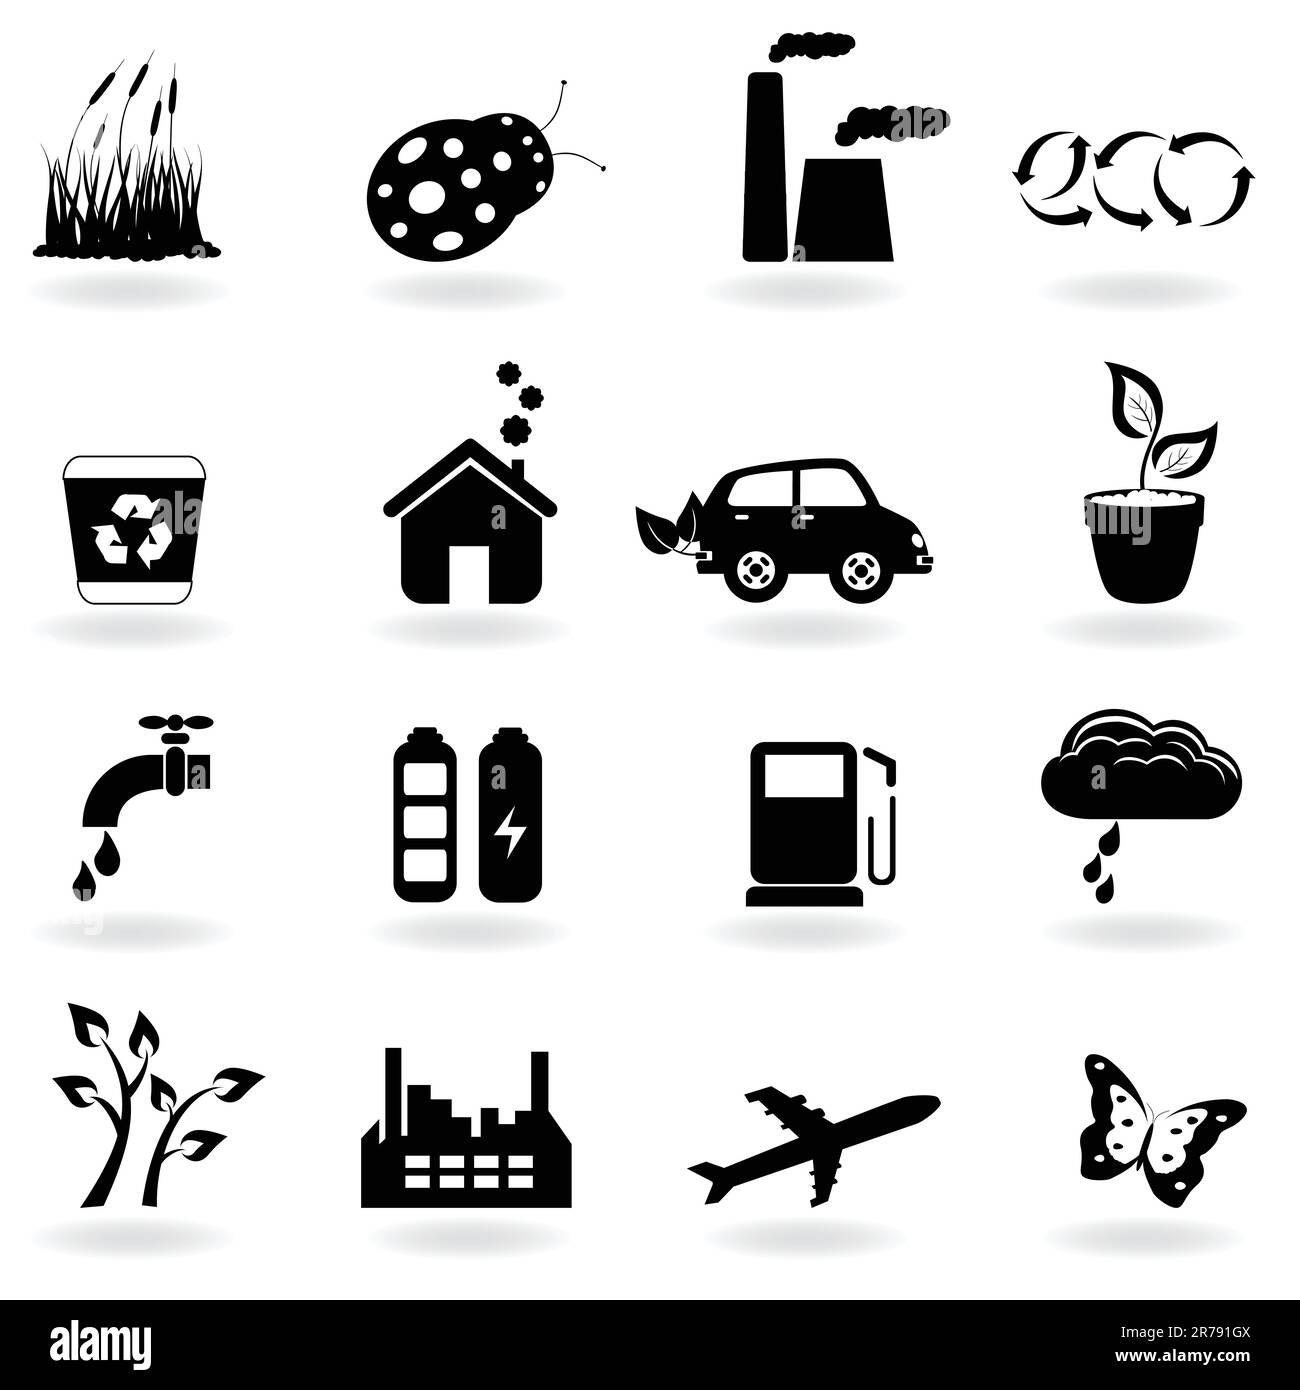 Eco symbols in icon set Stock Vector